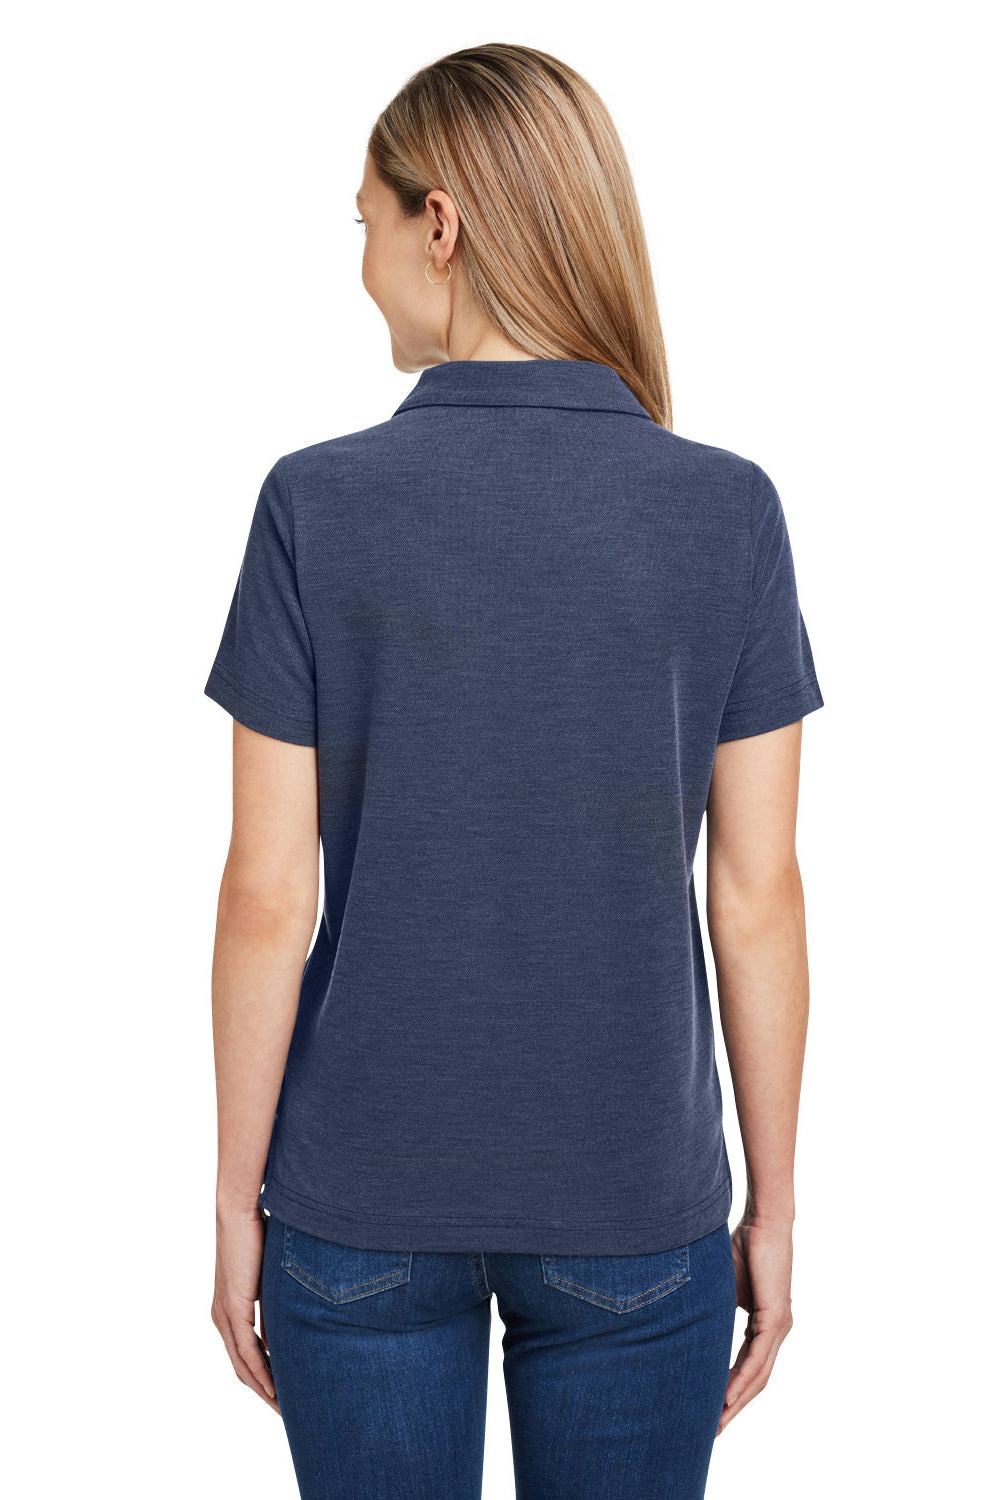 Core 365 CE112W Womens Fusion ChromaSoft Performance Moisture Wicking Pique Short Sleeve Polo Shirt Heather Classic Navy Blue Back